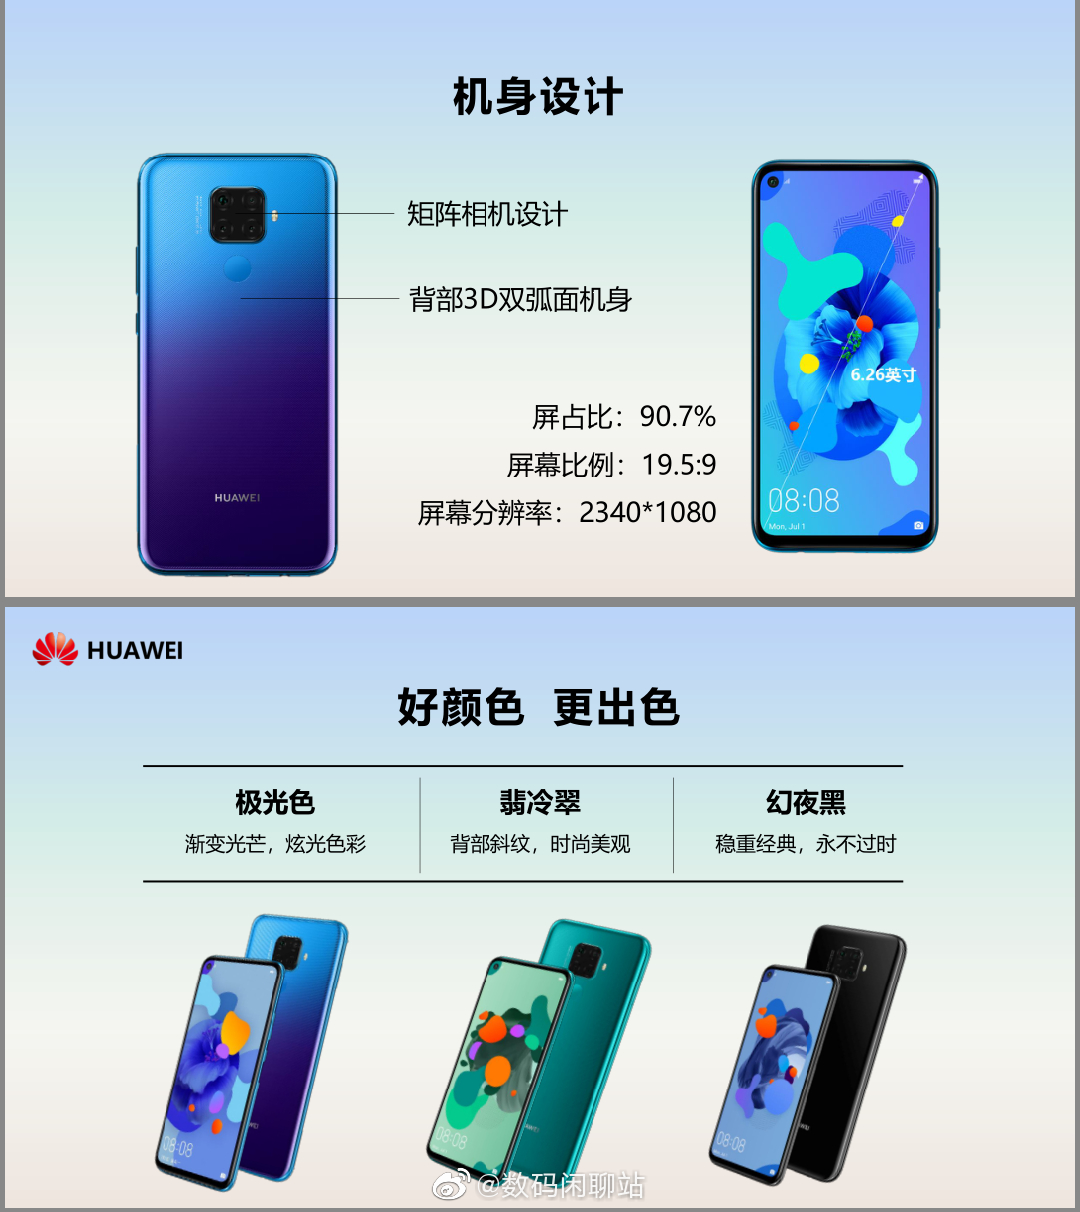 Zeestraat Dezelfde Ambassade Leaked Huawei Nova 5i Pro (Mate 30 Lite) promo materials reveal specs -  Gizmochina